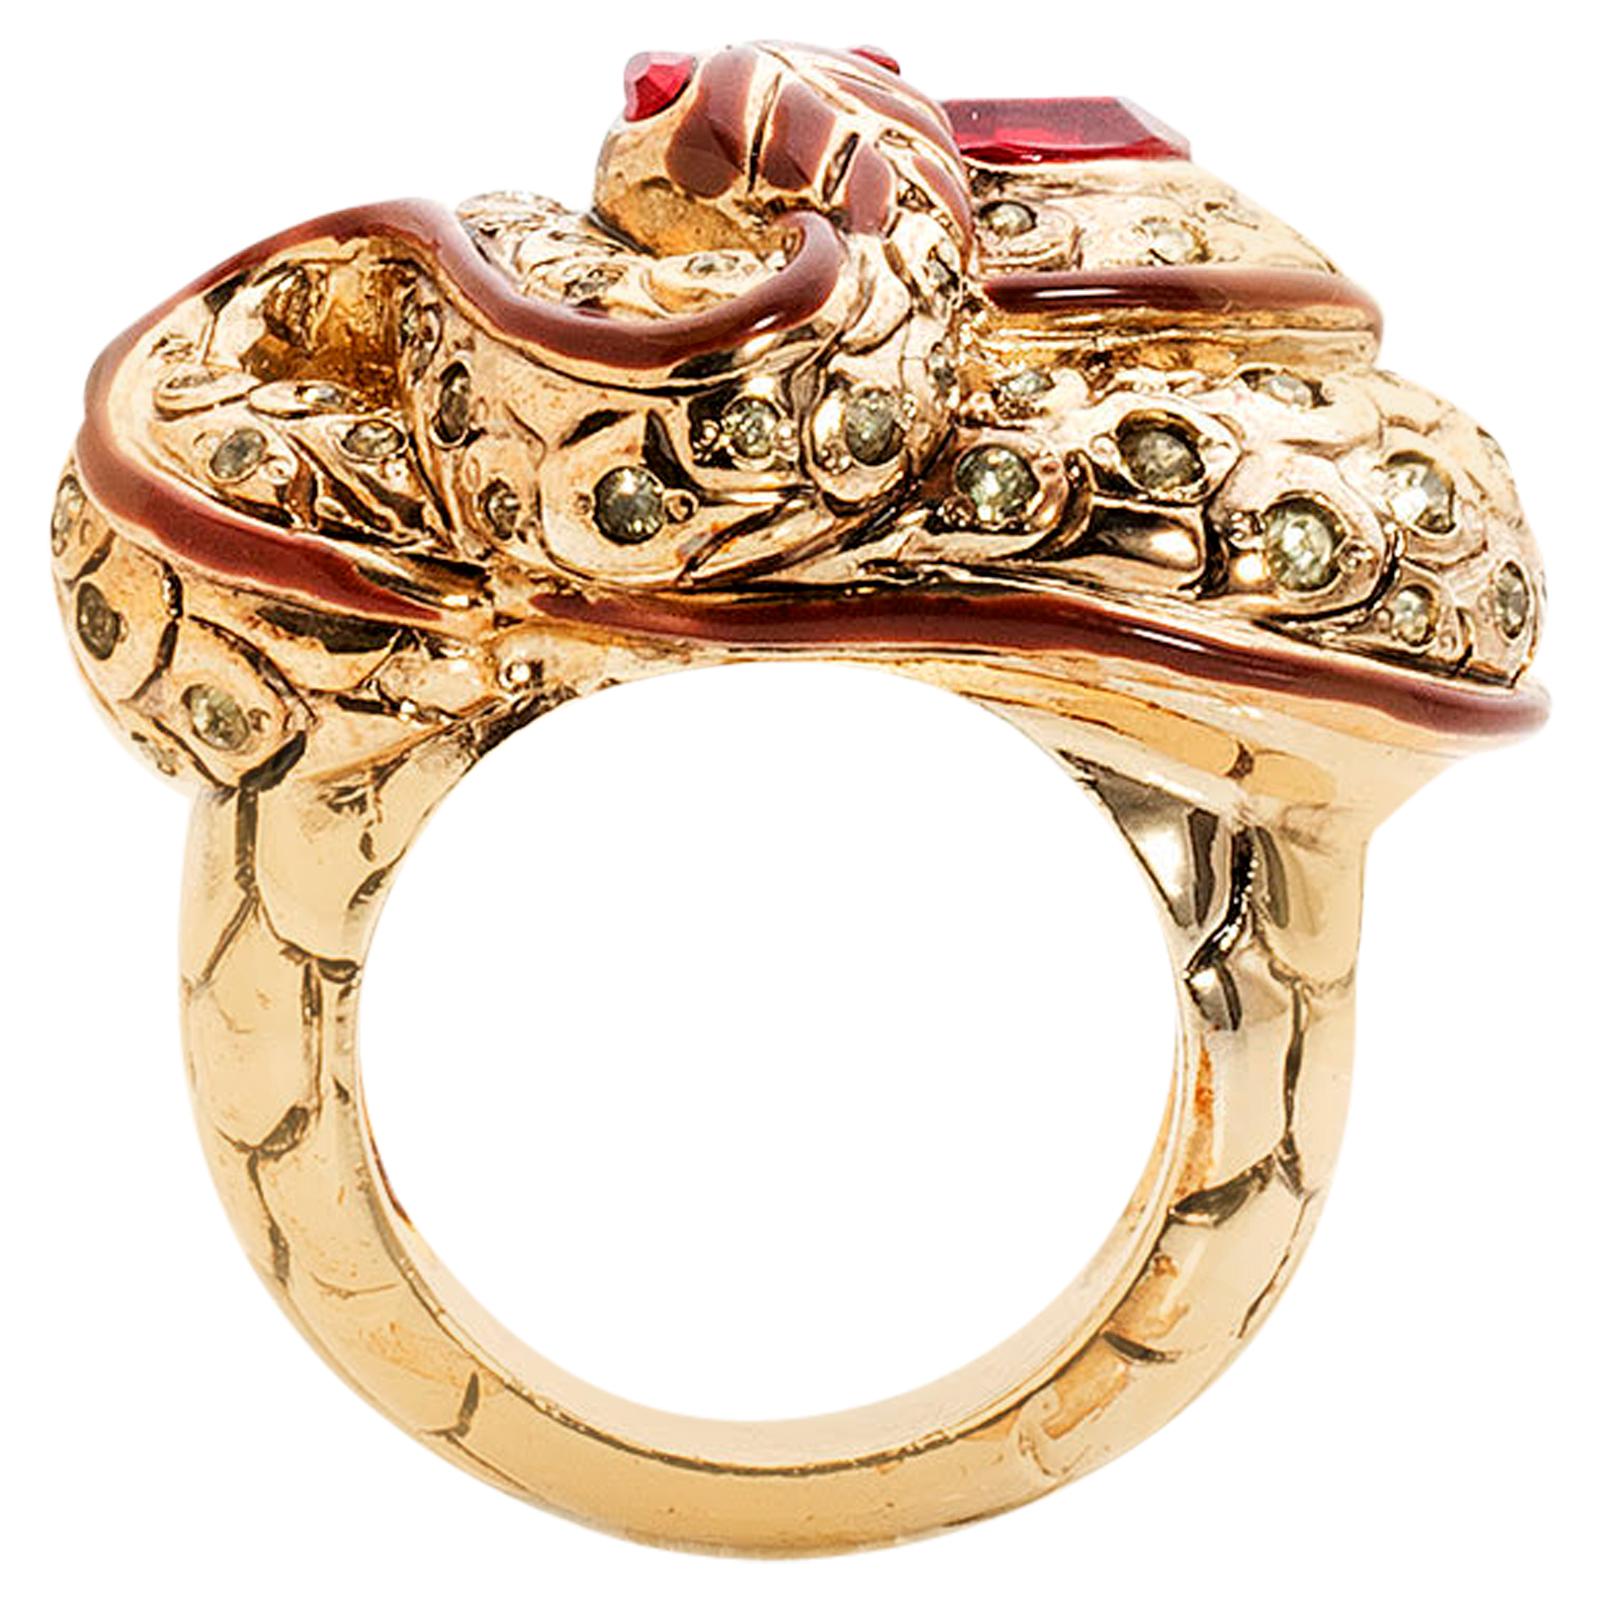 donatella versace wedding ring